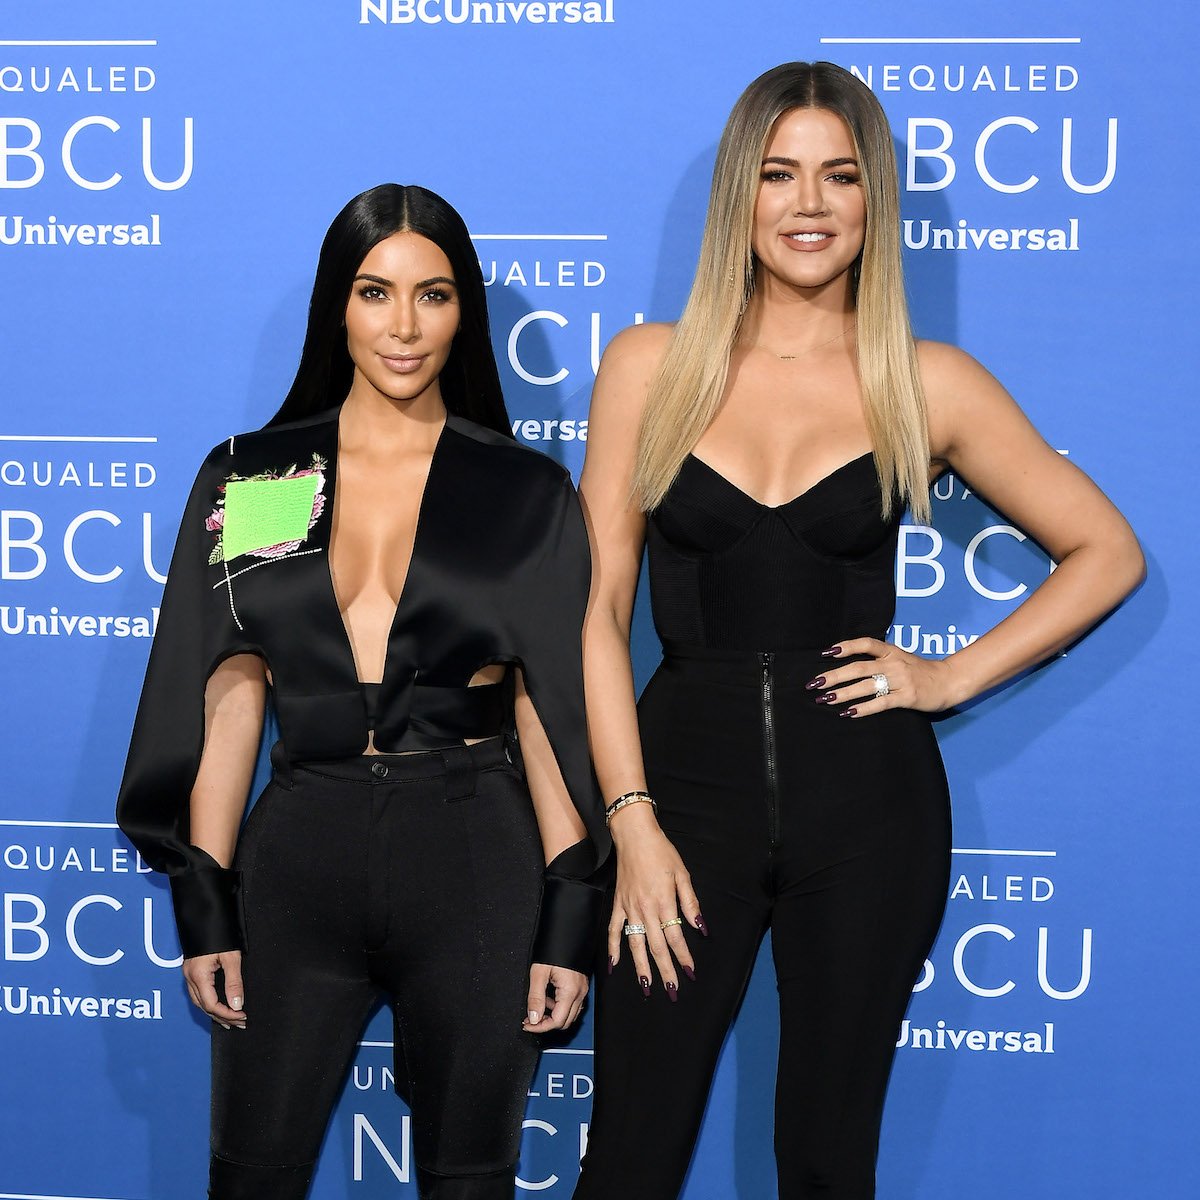 Kim Kardashian West and Khloe Kardashian pose together at an event.